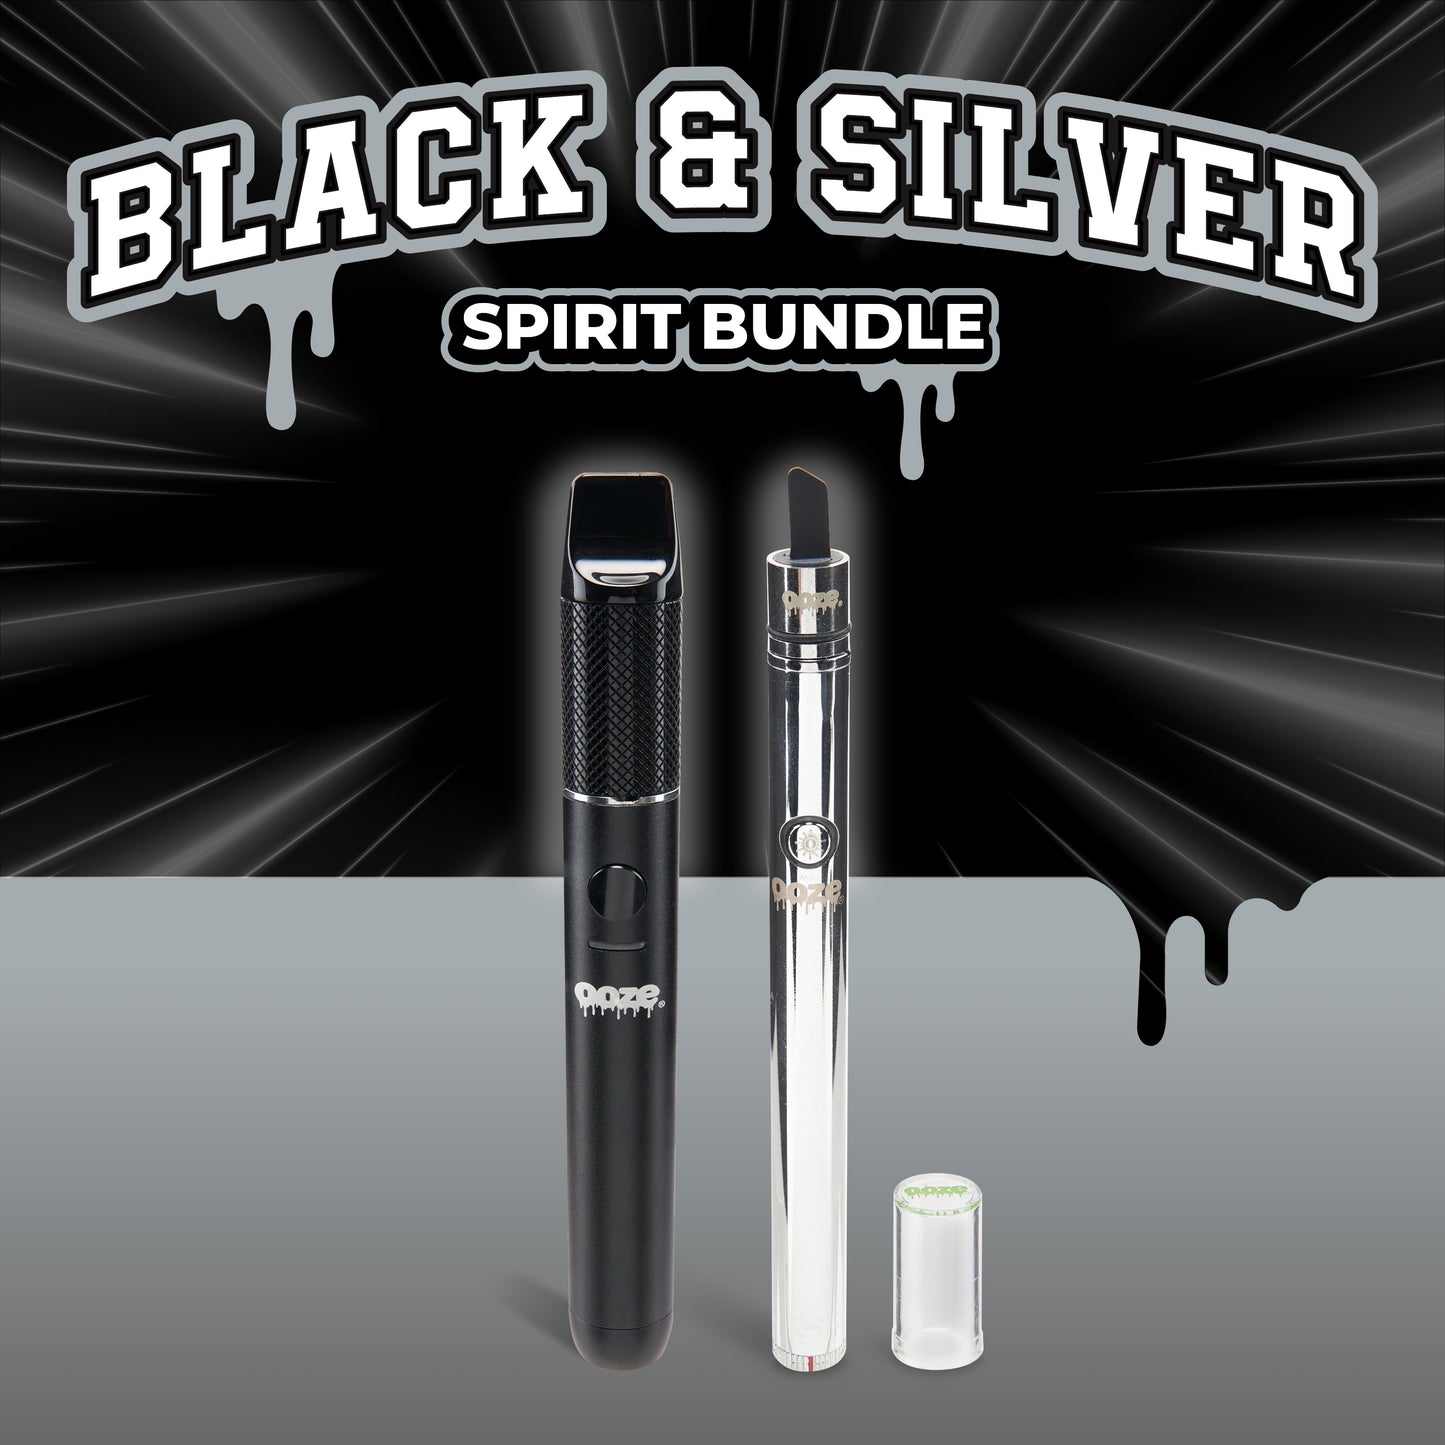 Black and Silver Spirit Bundle